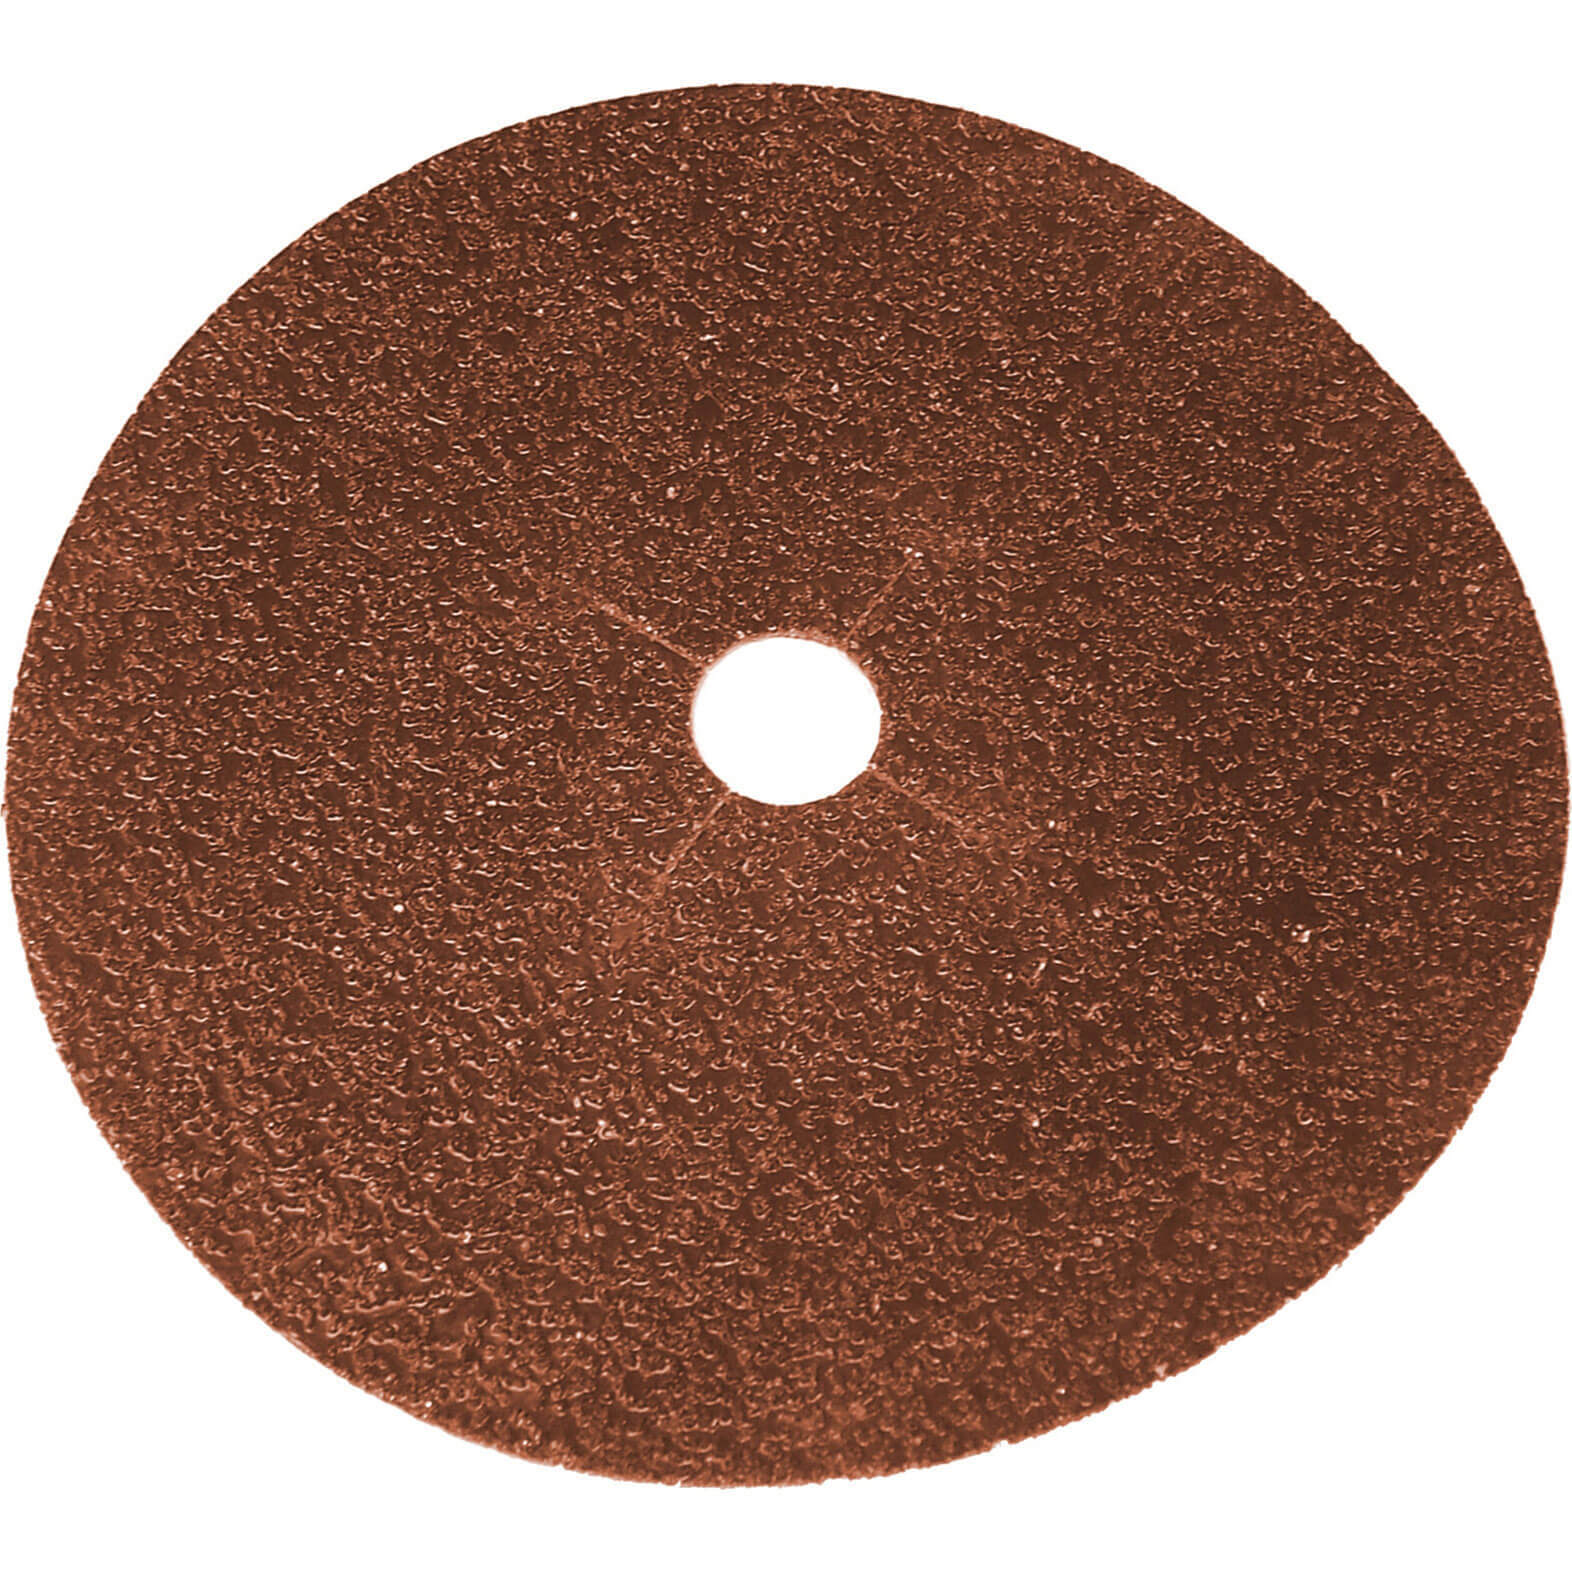 Image of Faithfull Aluminium Oxide Sanding Discs 178mm 40g